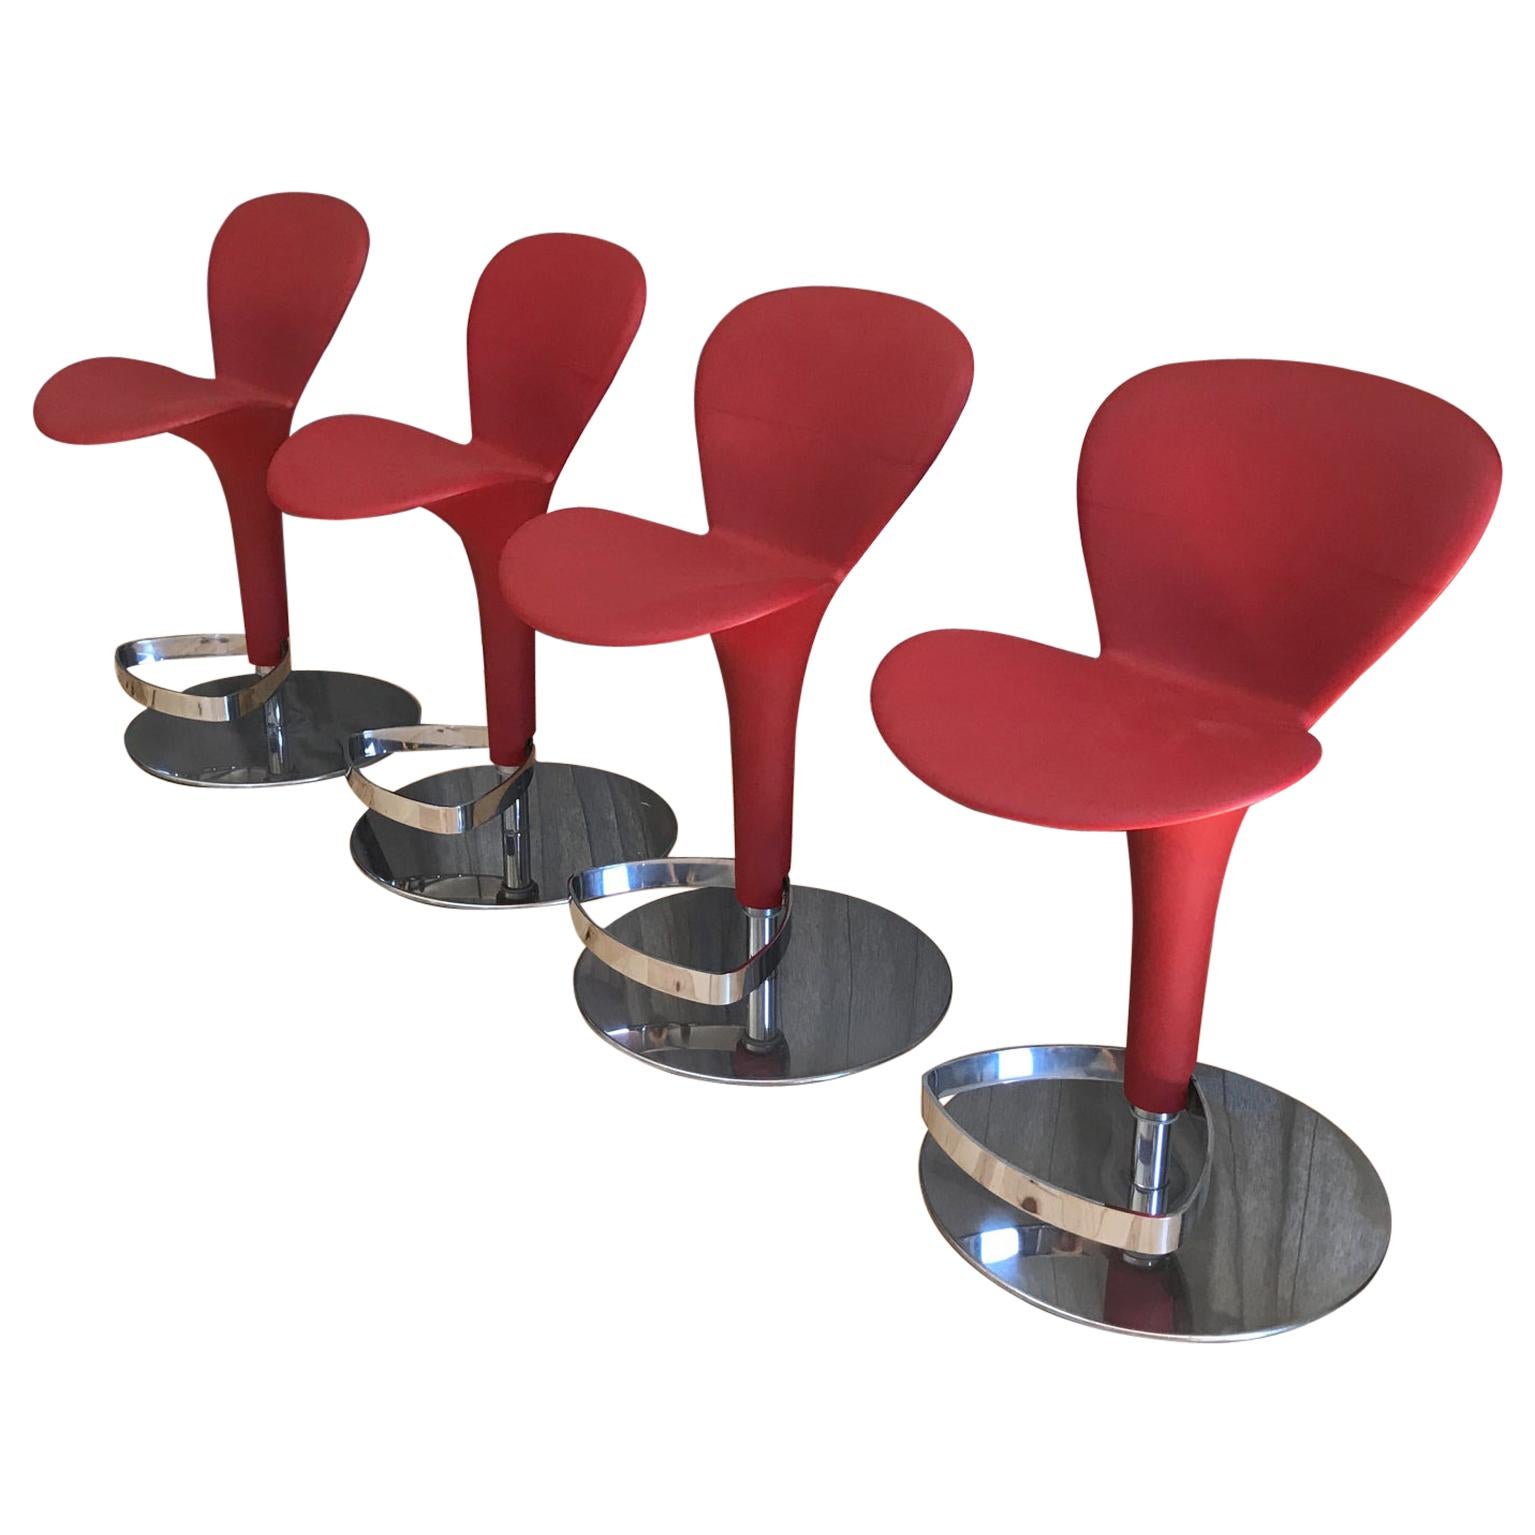 Italy Four Red Bar Stools by Tonin Casa Oslo Petal Freeform adjustable height